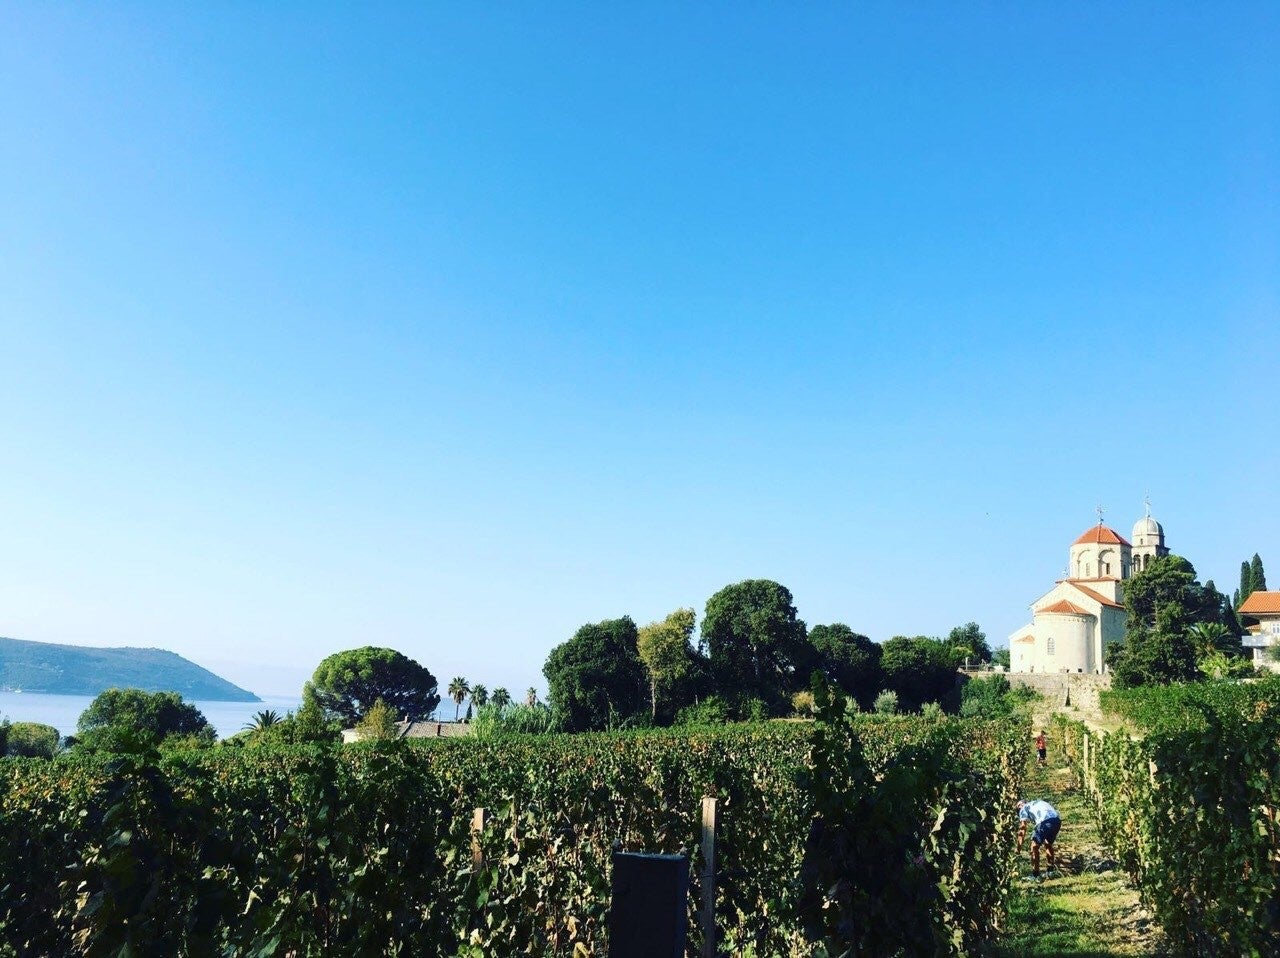 Castel Savina is the only vineyard on Montenegro’s coast